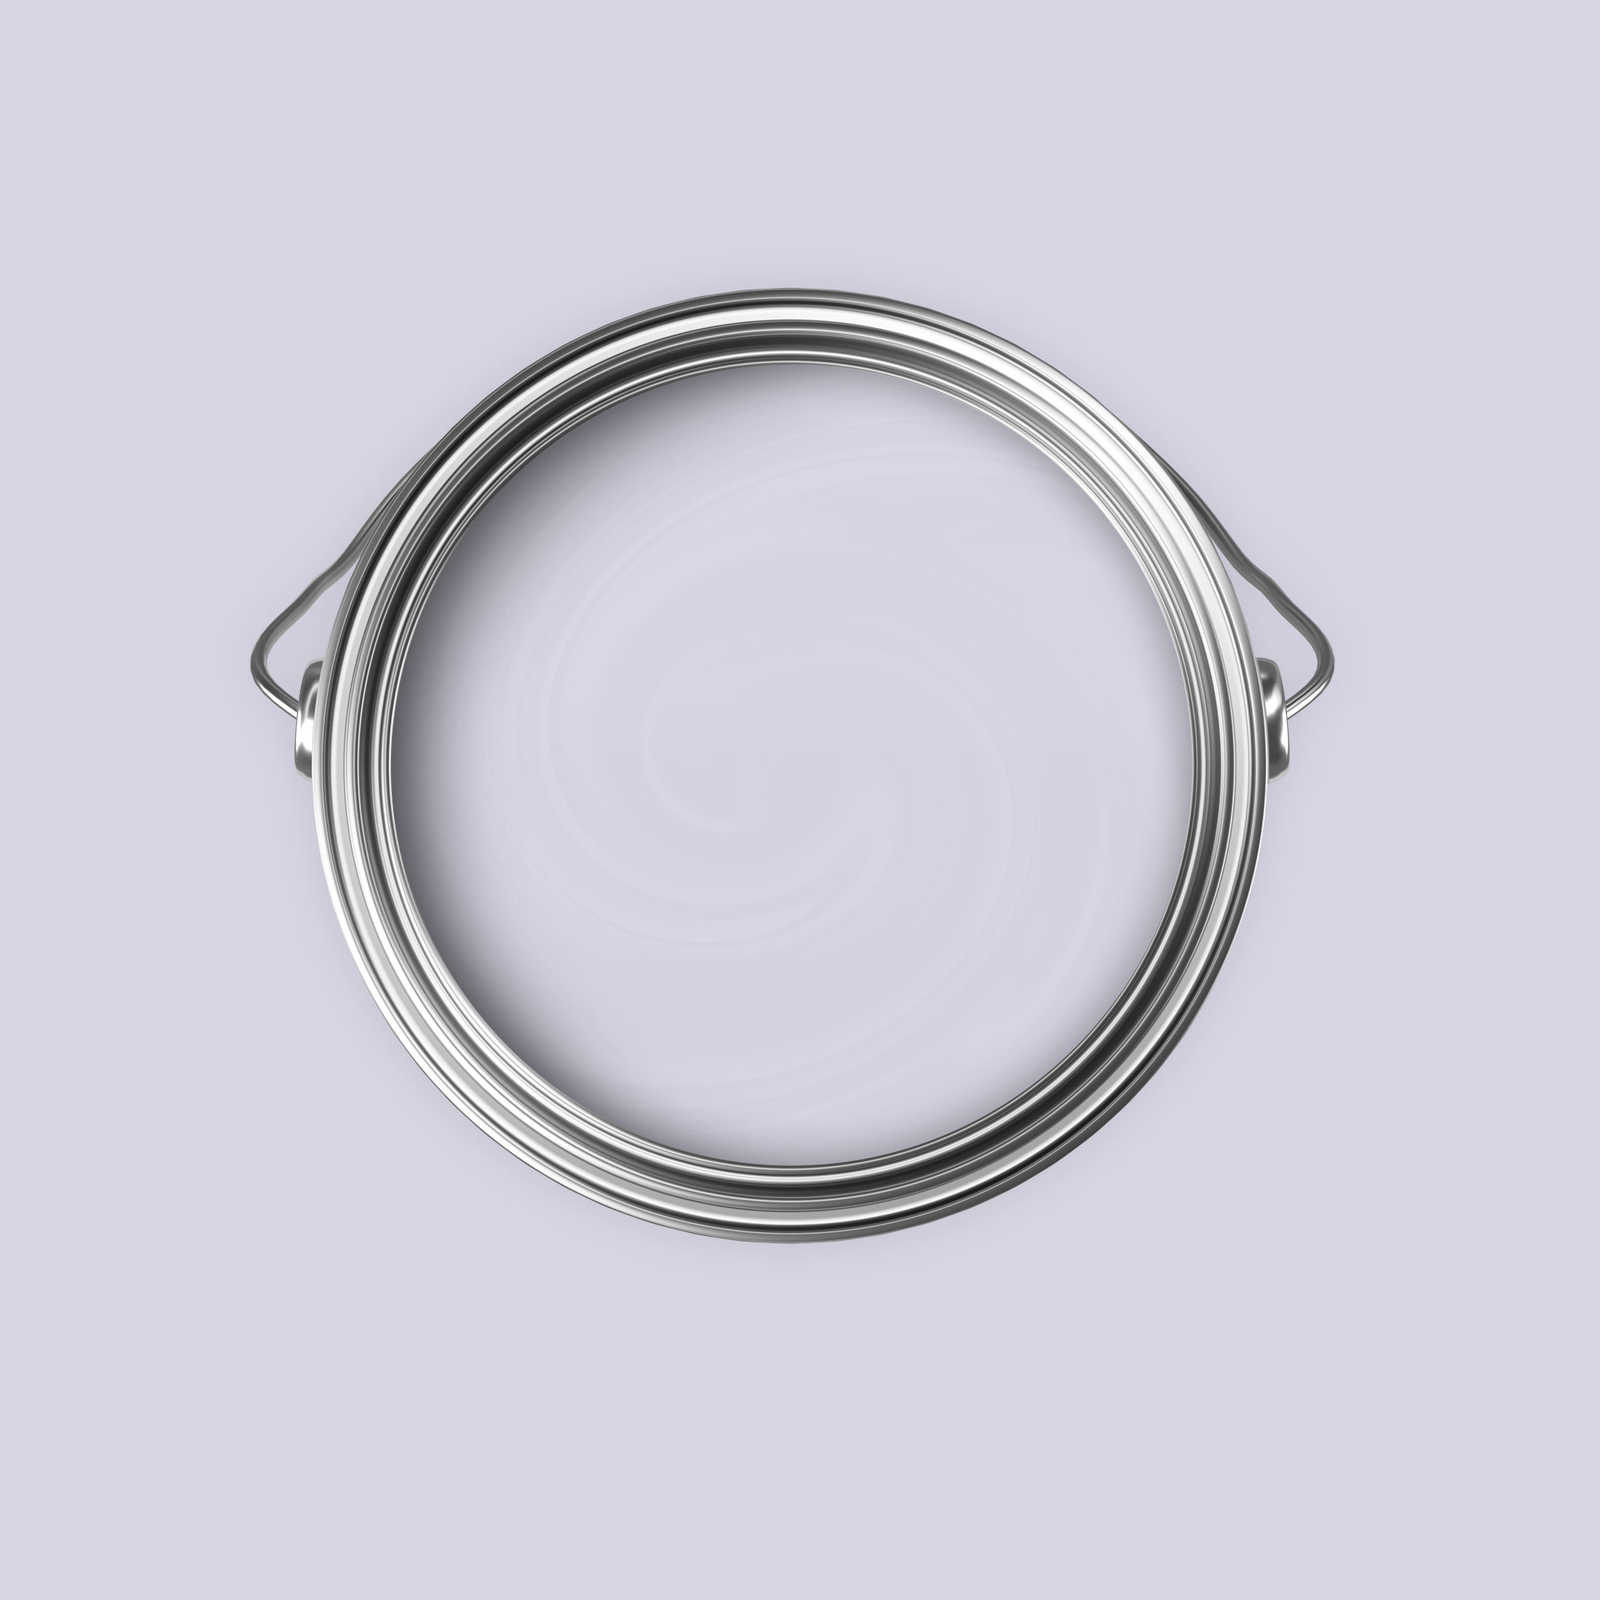             Premium Wall Paint pleasant lilac »Magical Mauve« NW203 – 5 litre
        